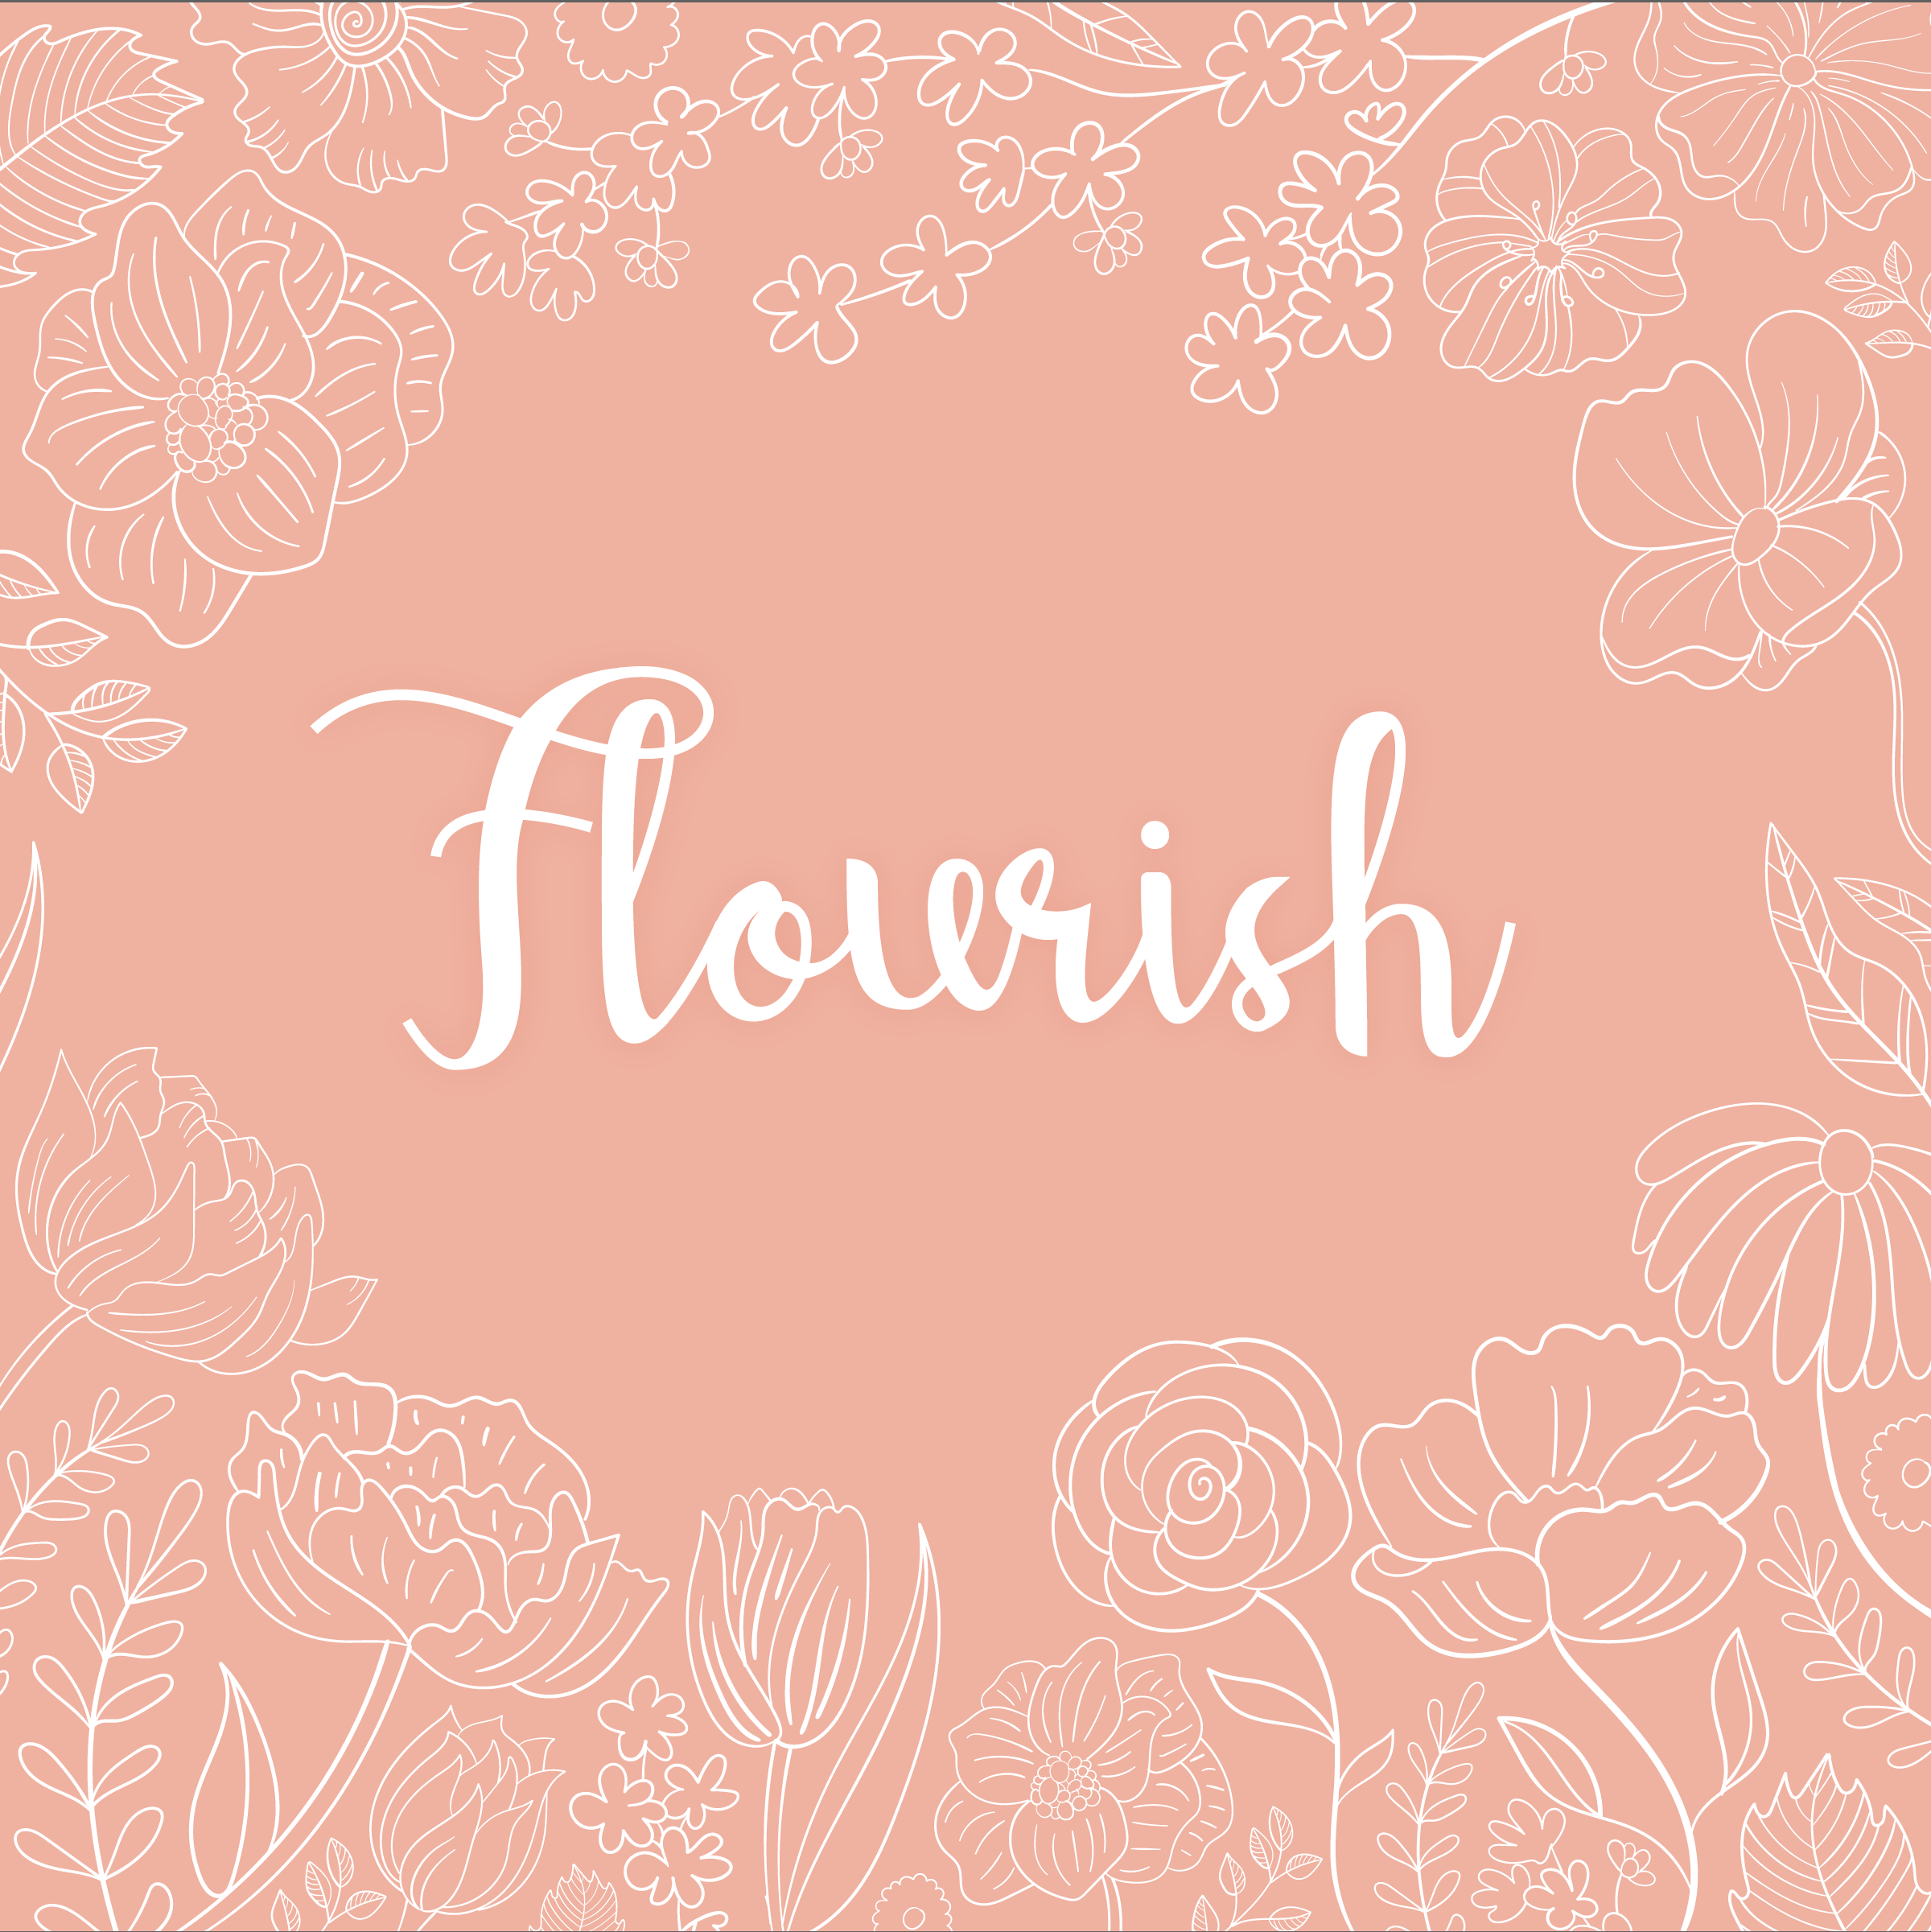 Flourish // A conversation with Lighthouse